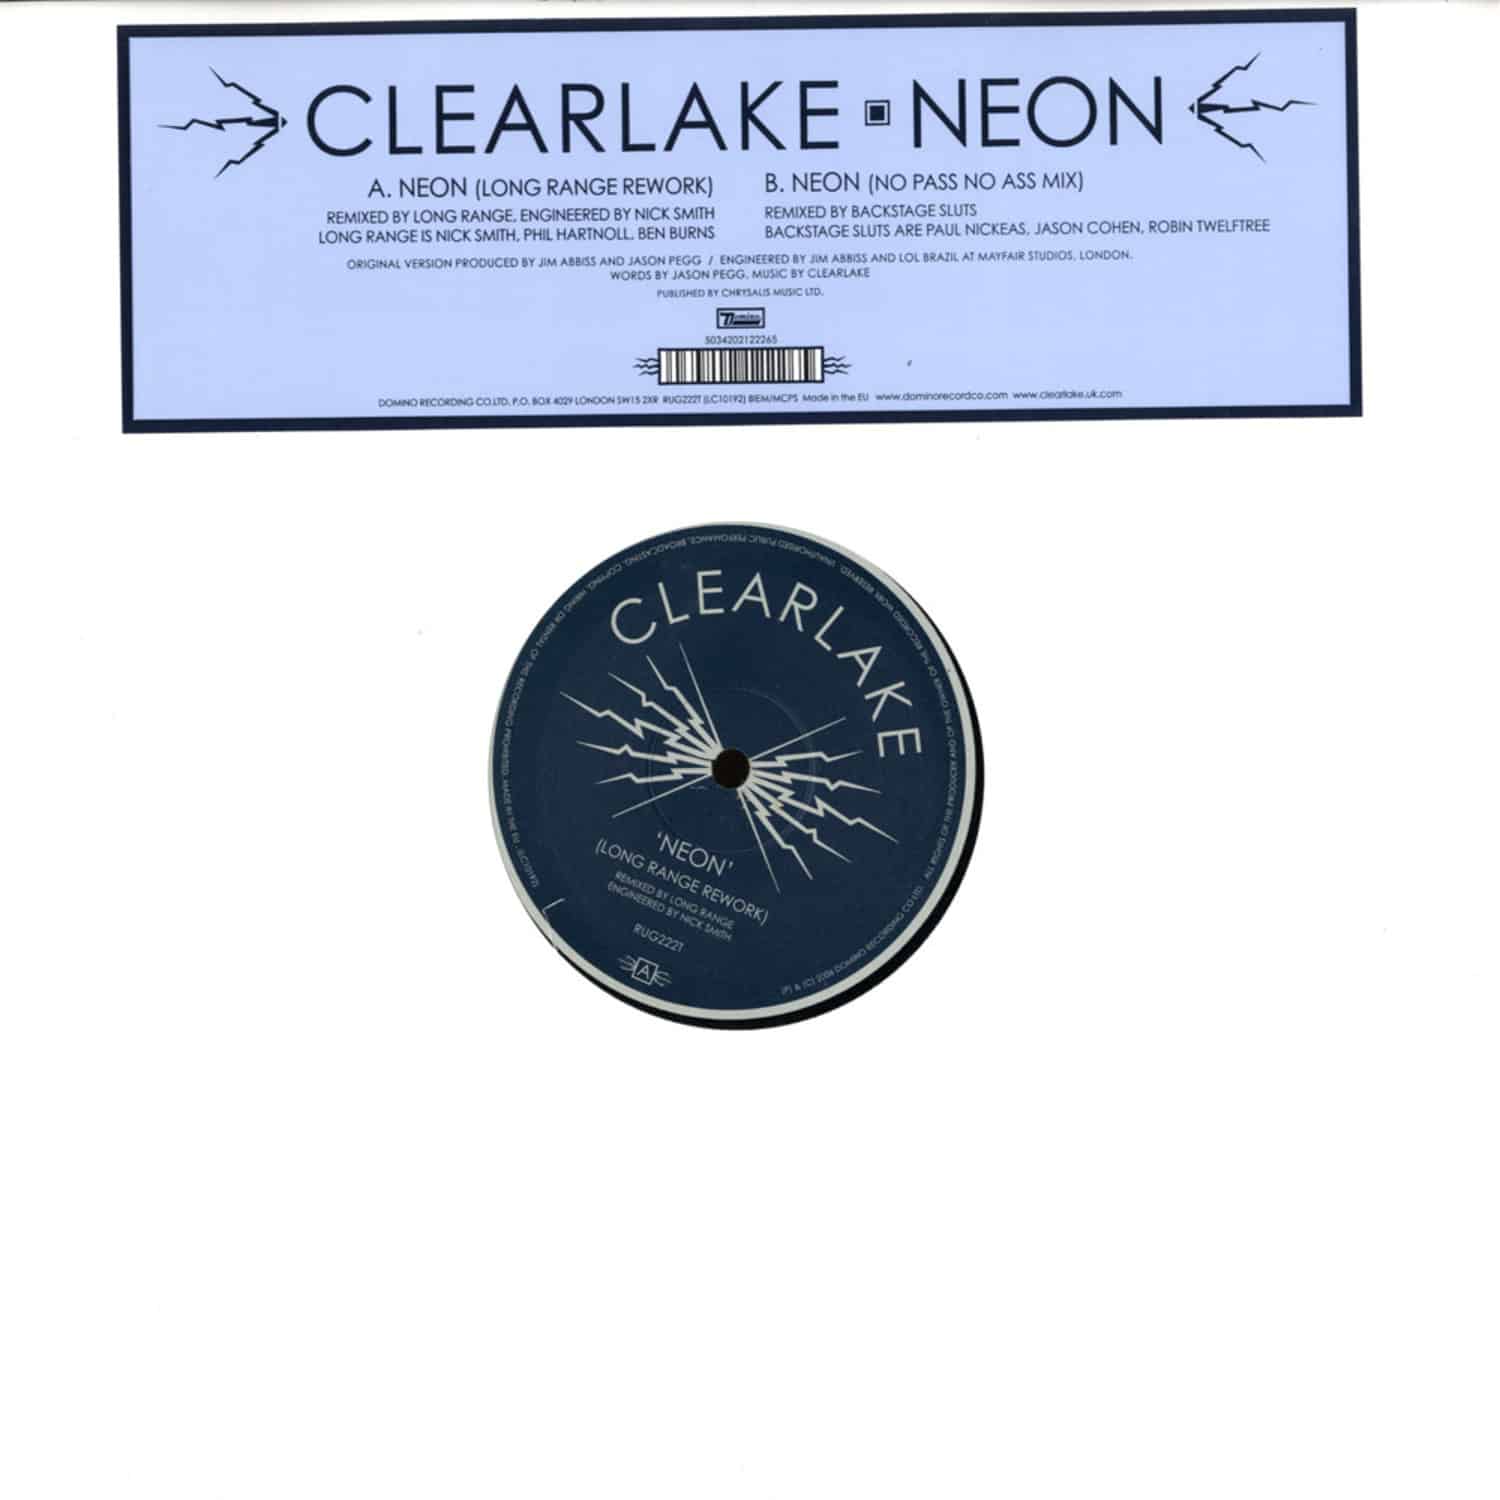 Clearlake - NEON